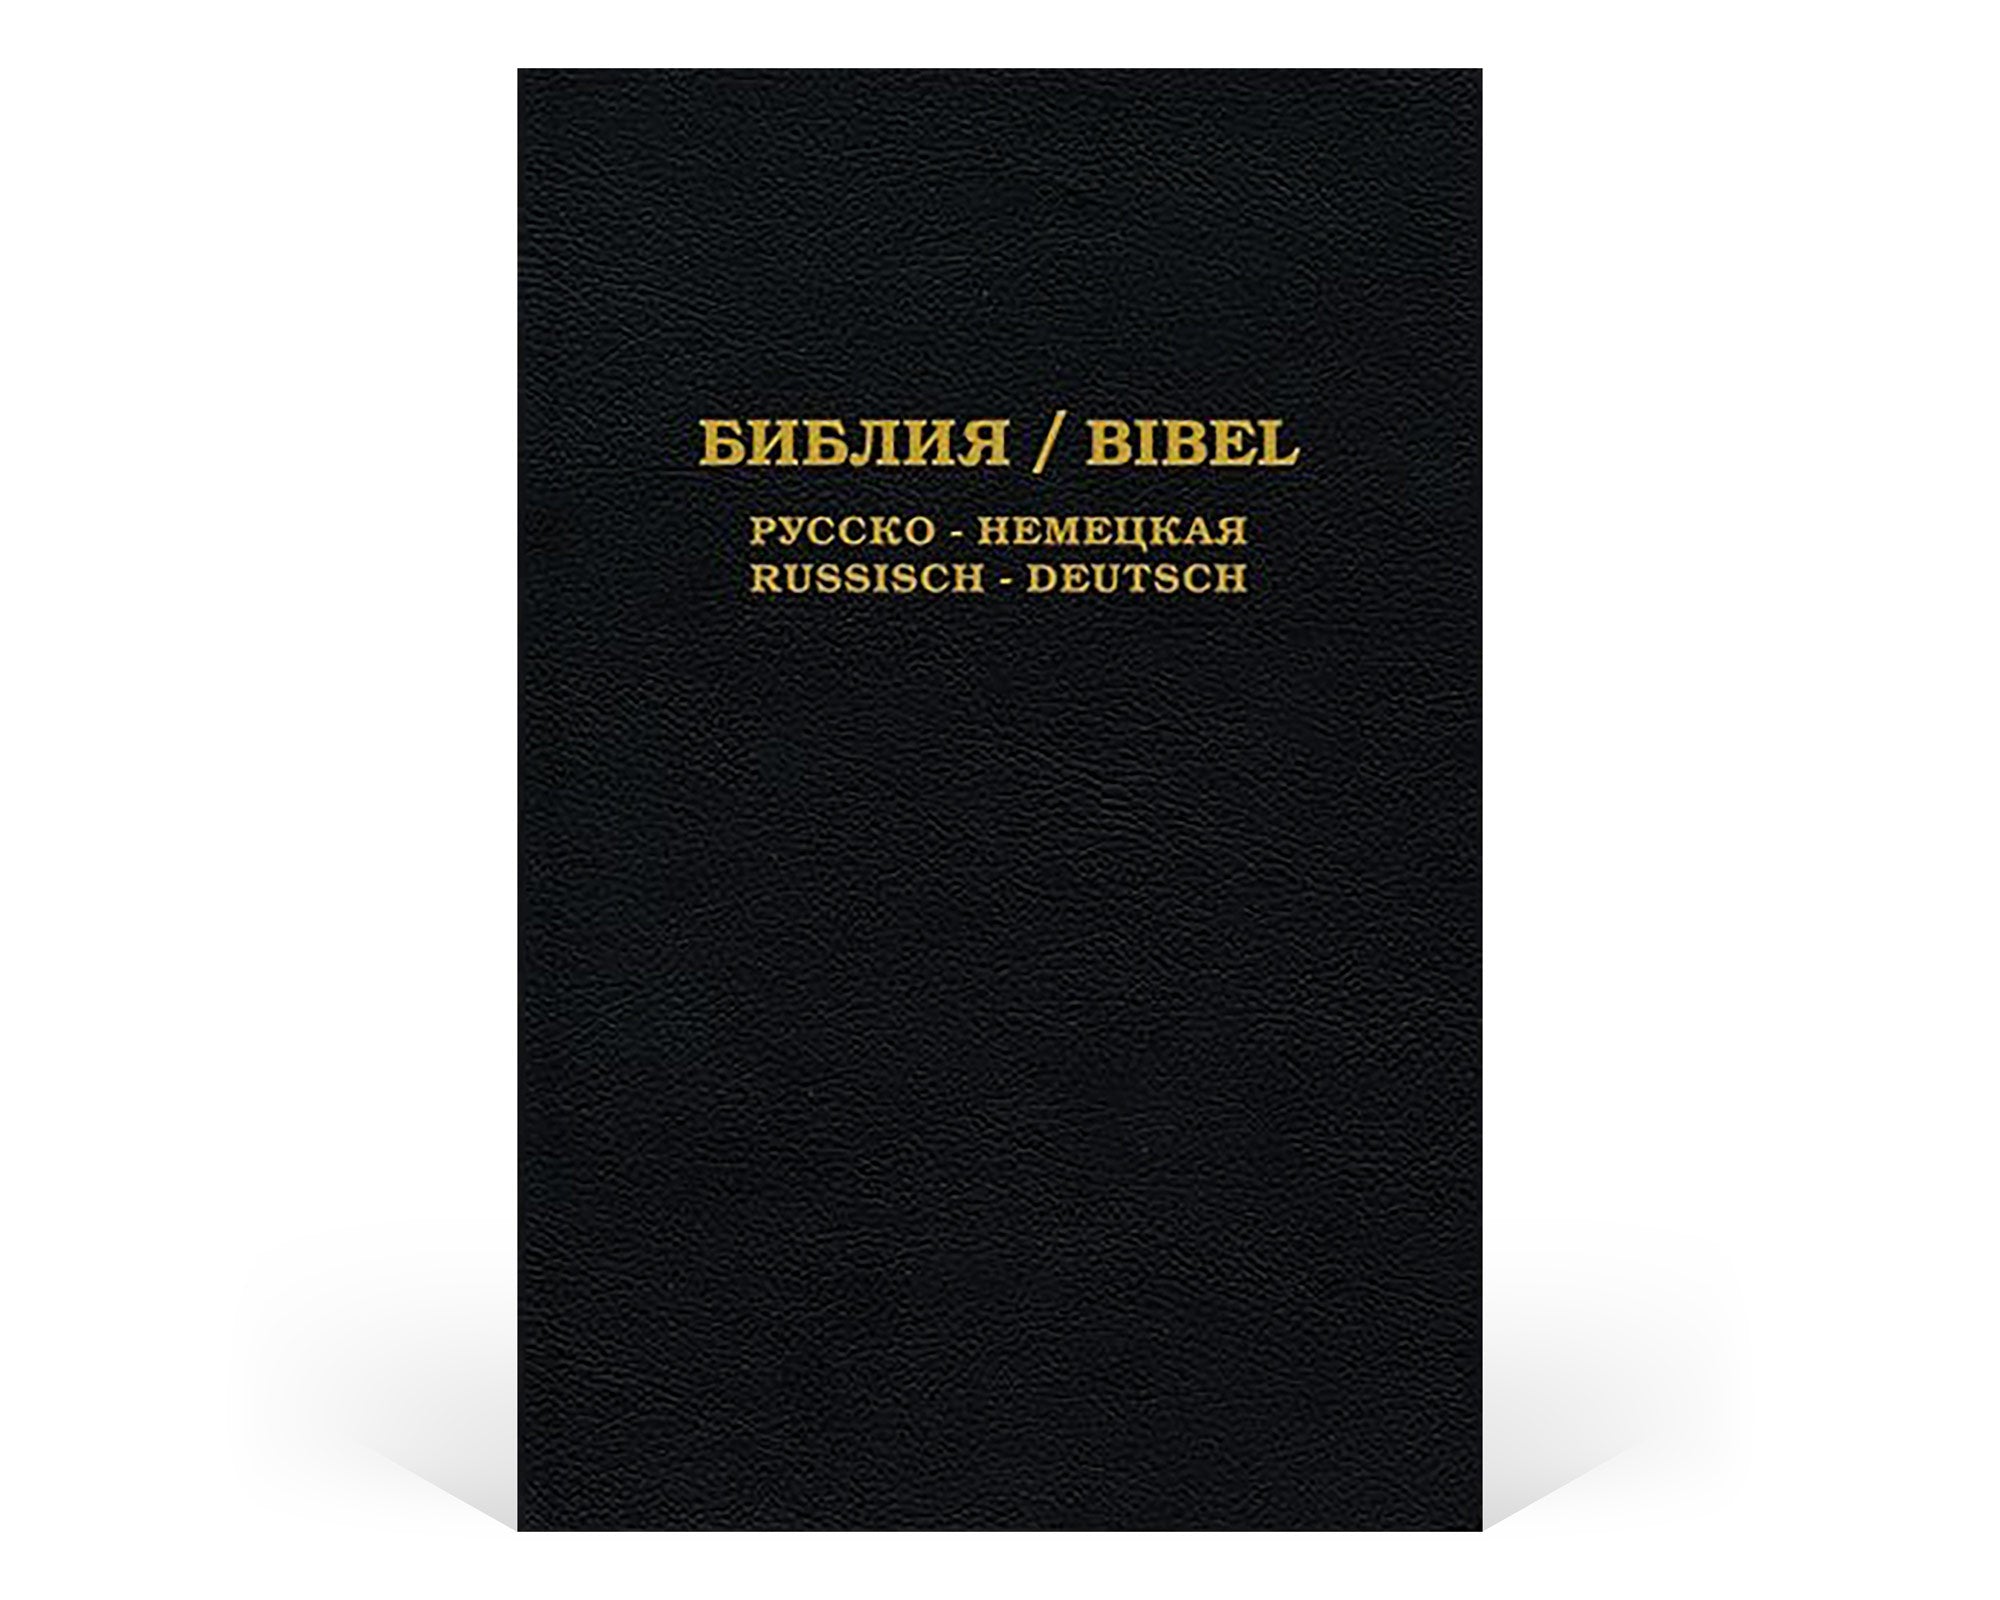 Bibel, Russisch-Deutsch